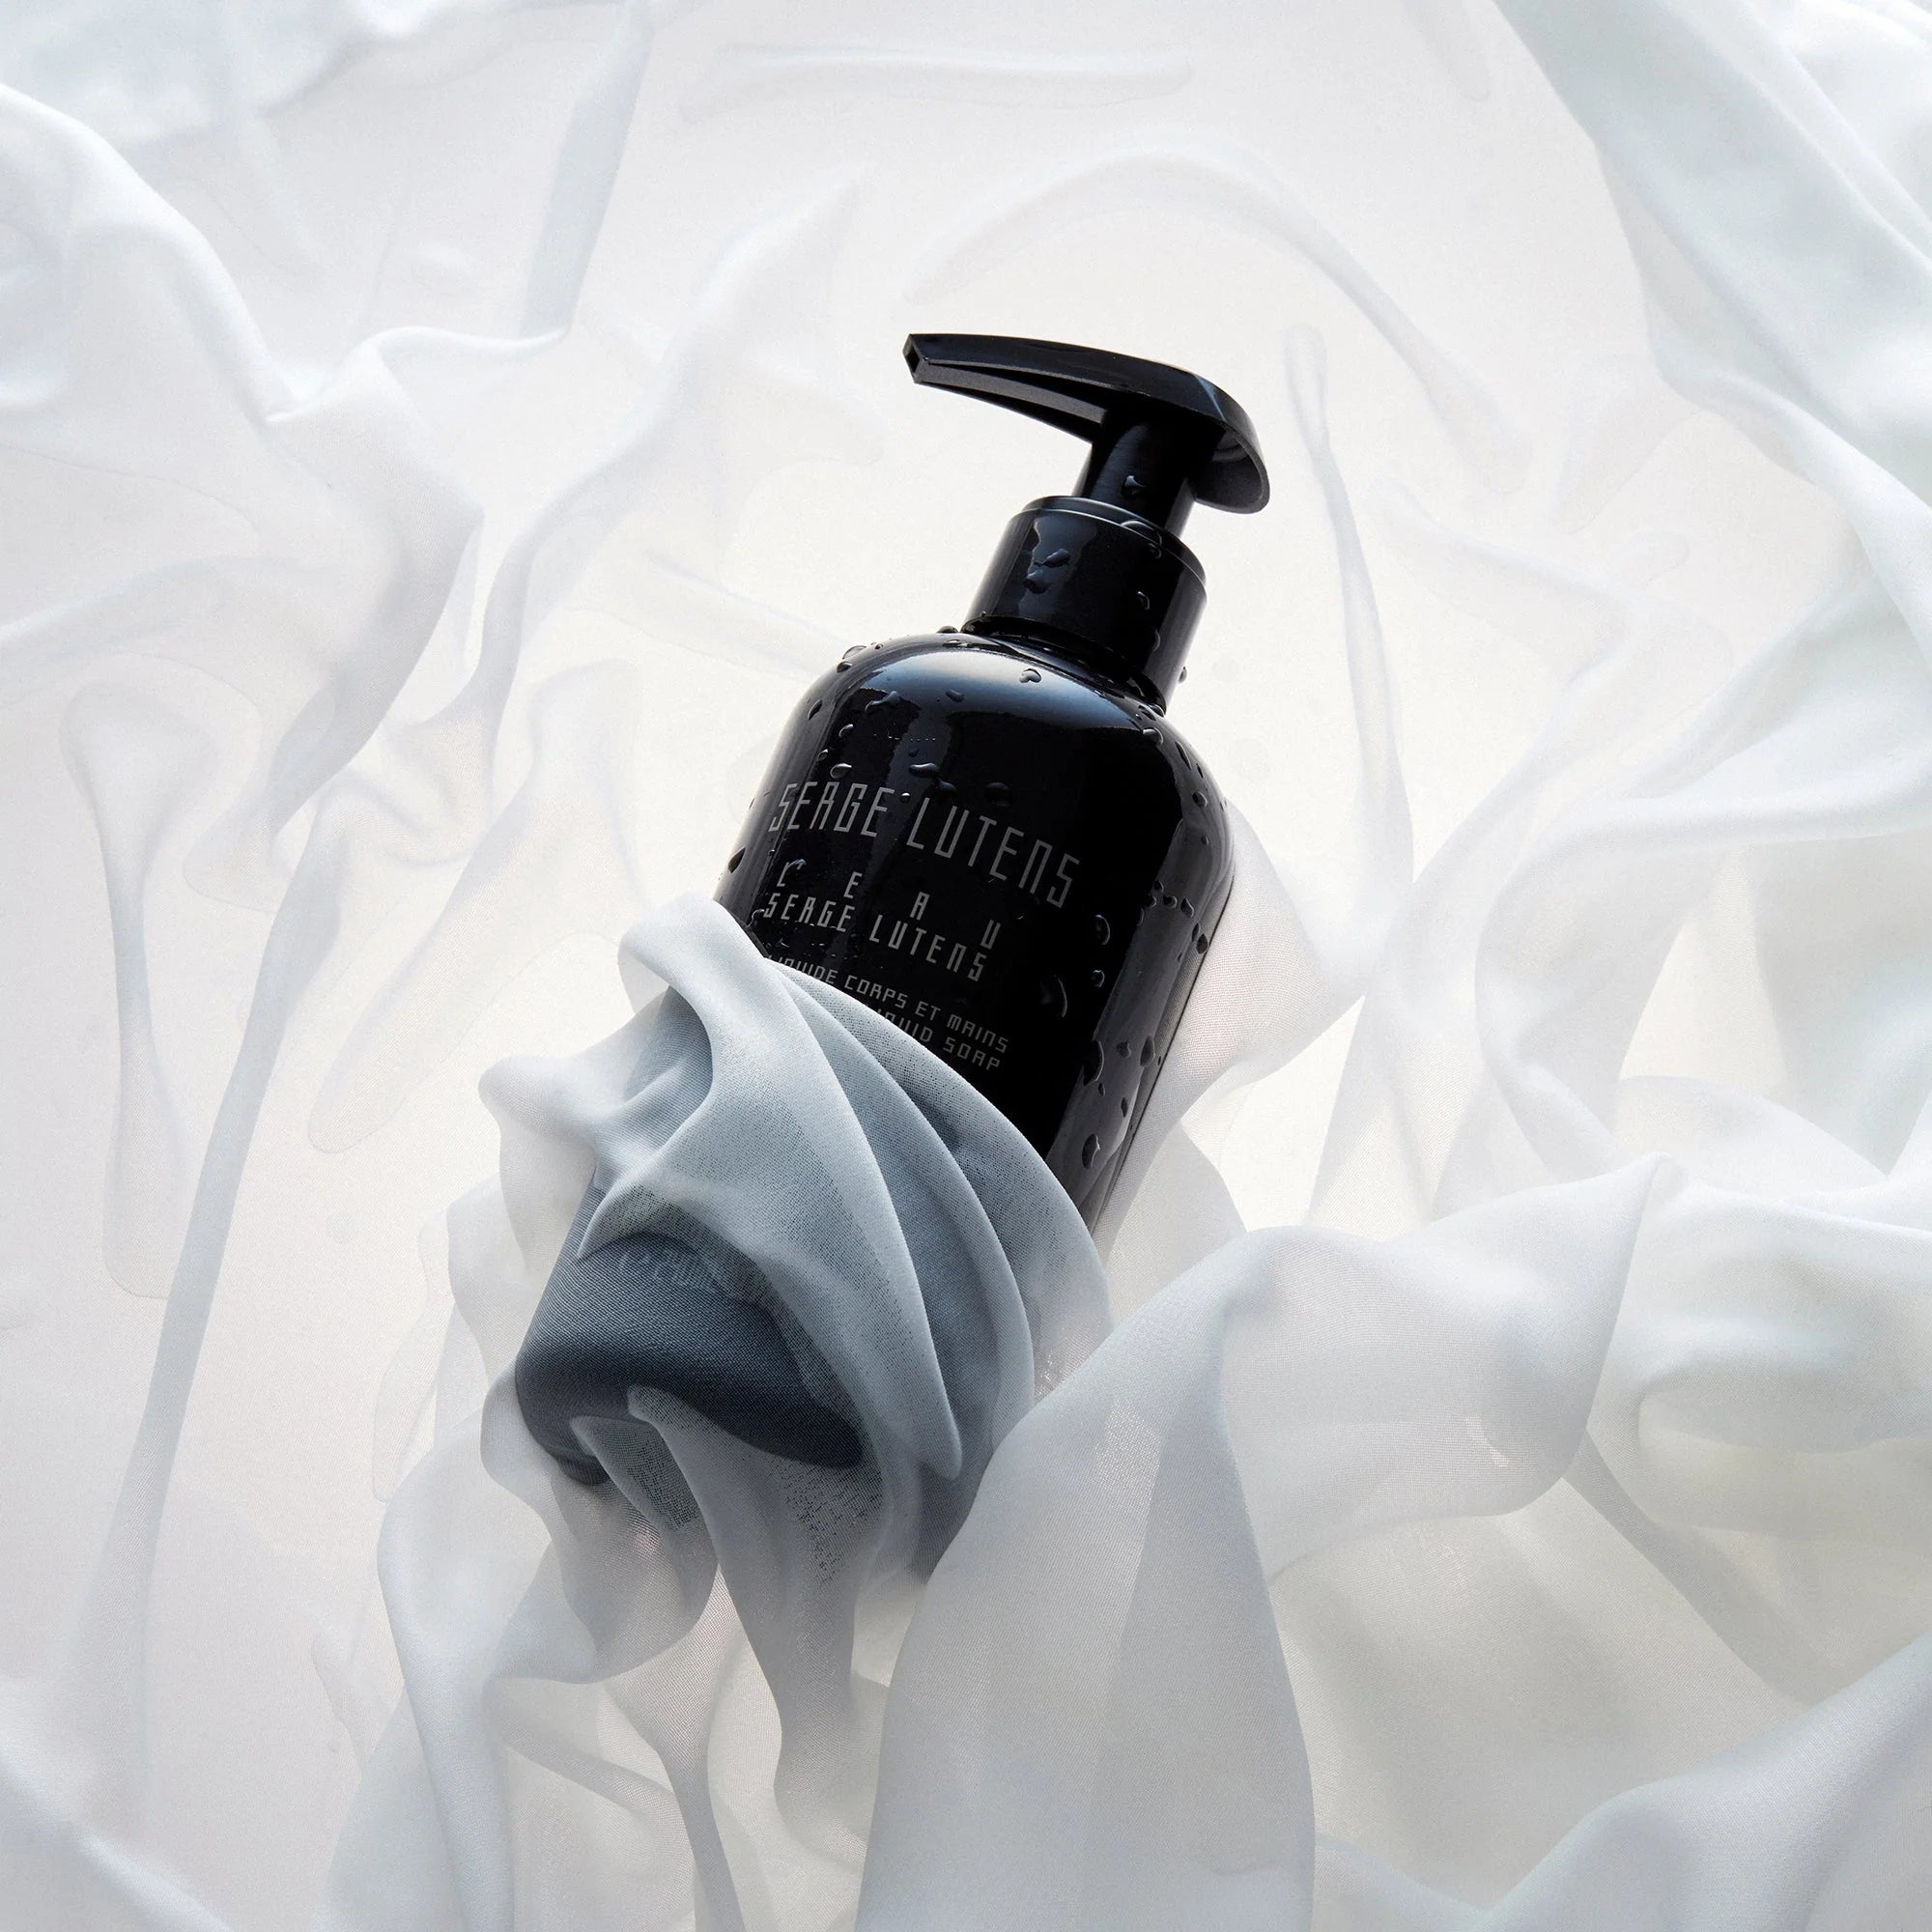 Serge Lutens Dans Le Bleu Qui Petille Hand And Body Cleansing Gel | My Perfume Shop Australia